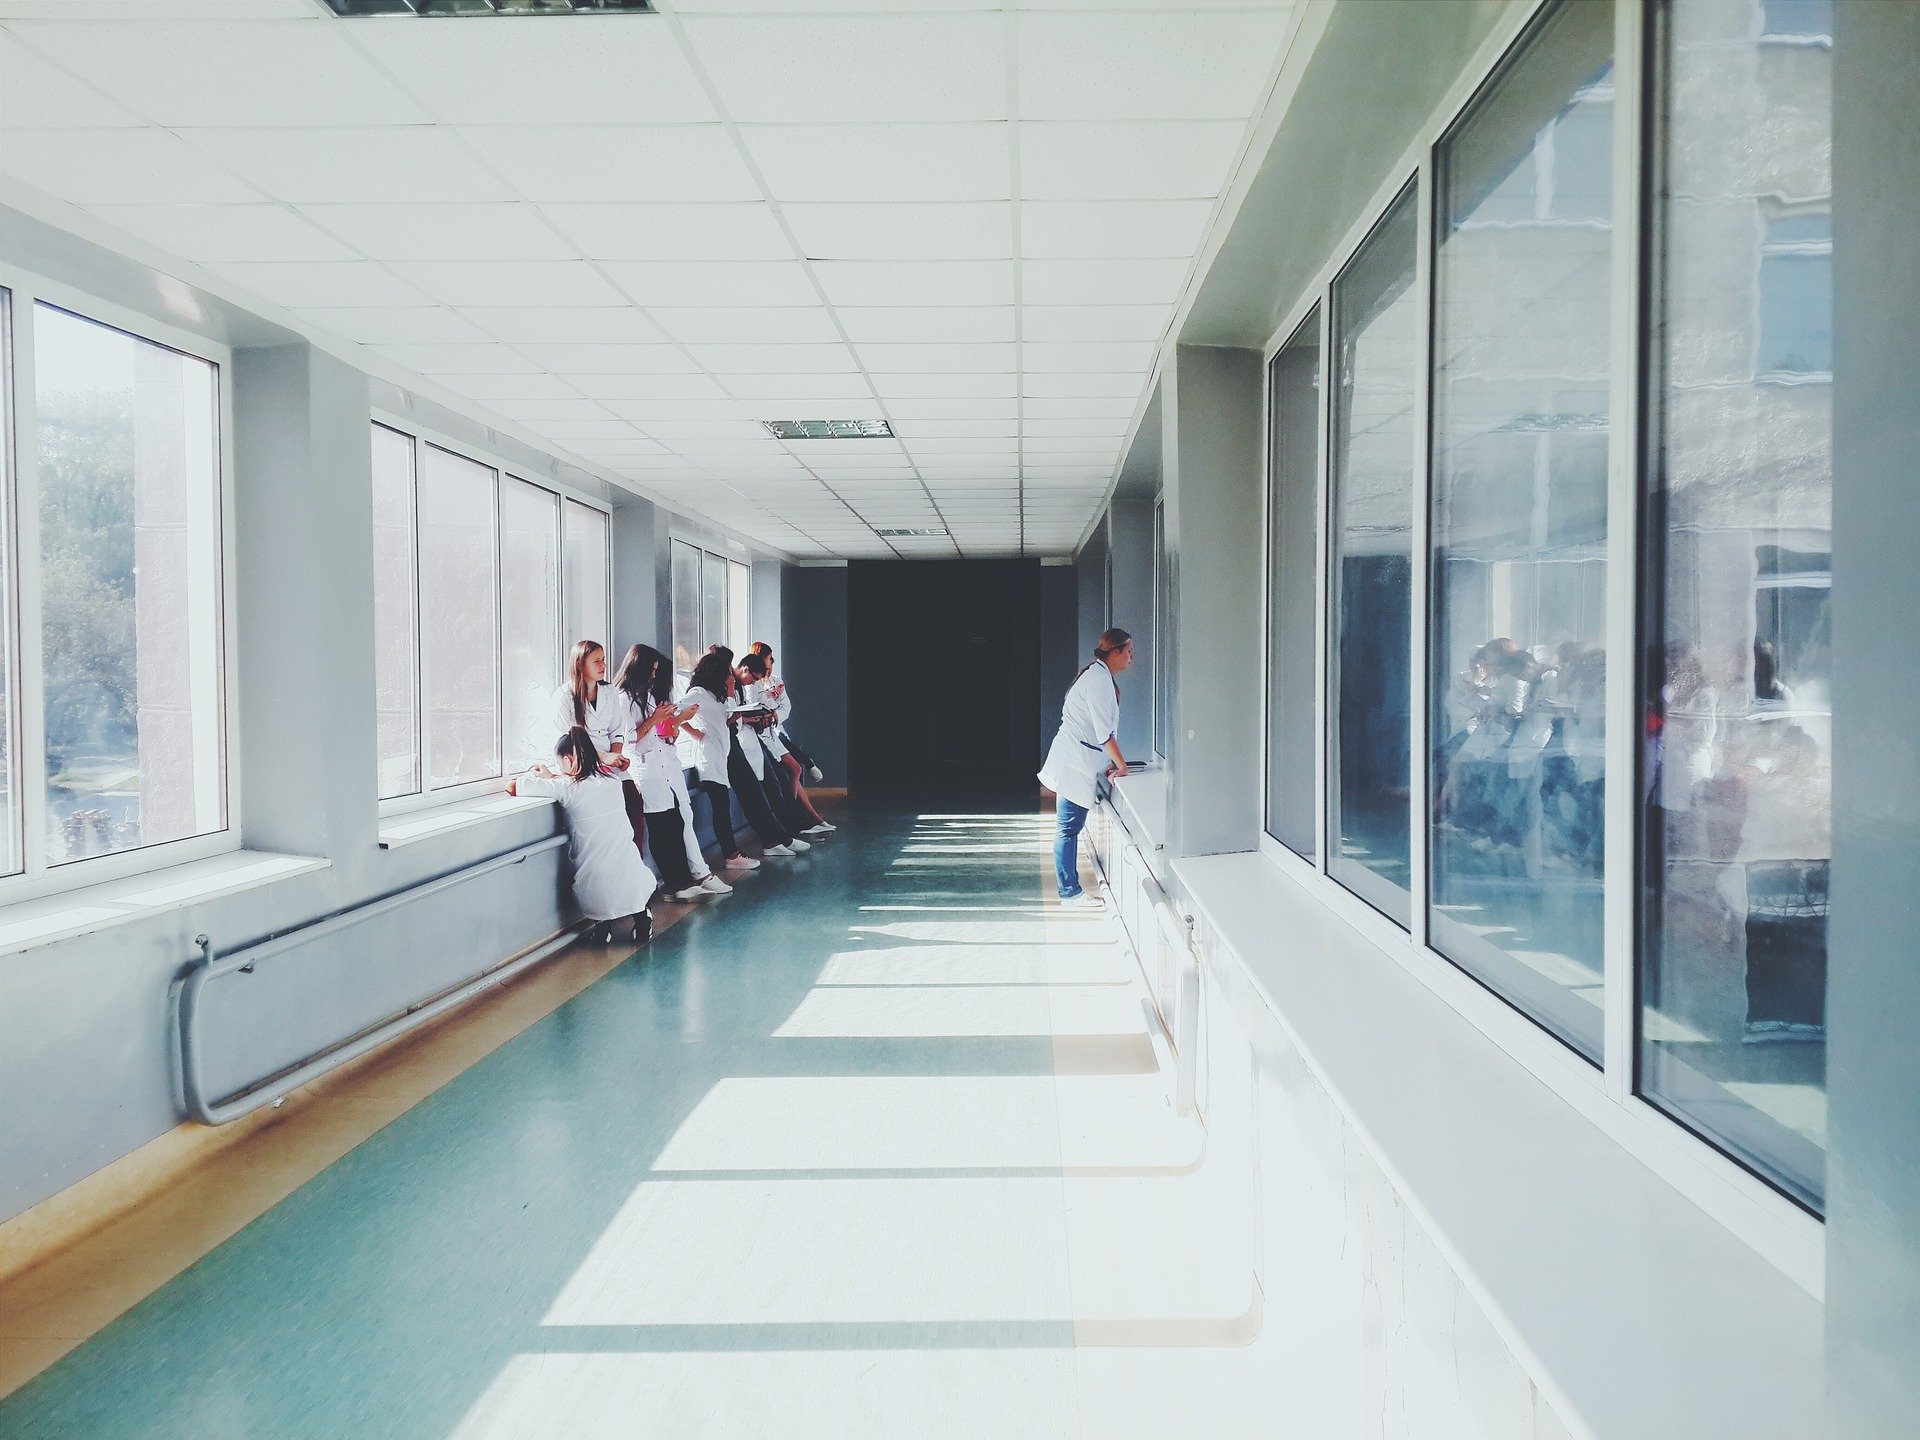 Pasillo de hospital. | Foto: Pixabay